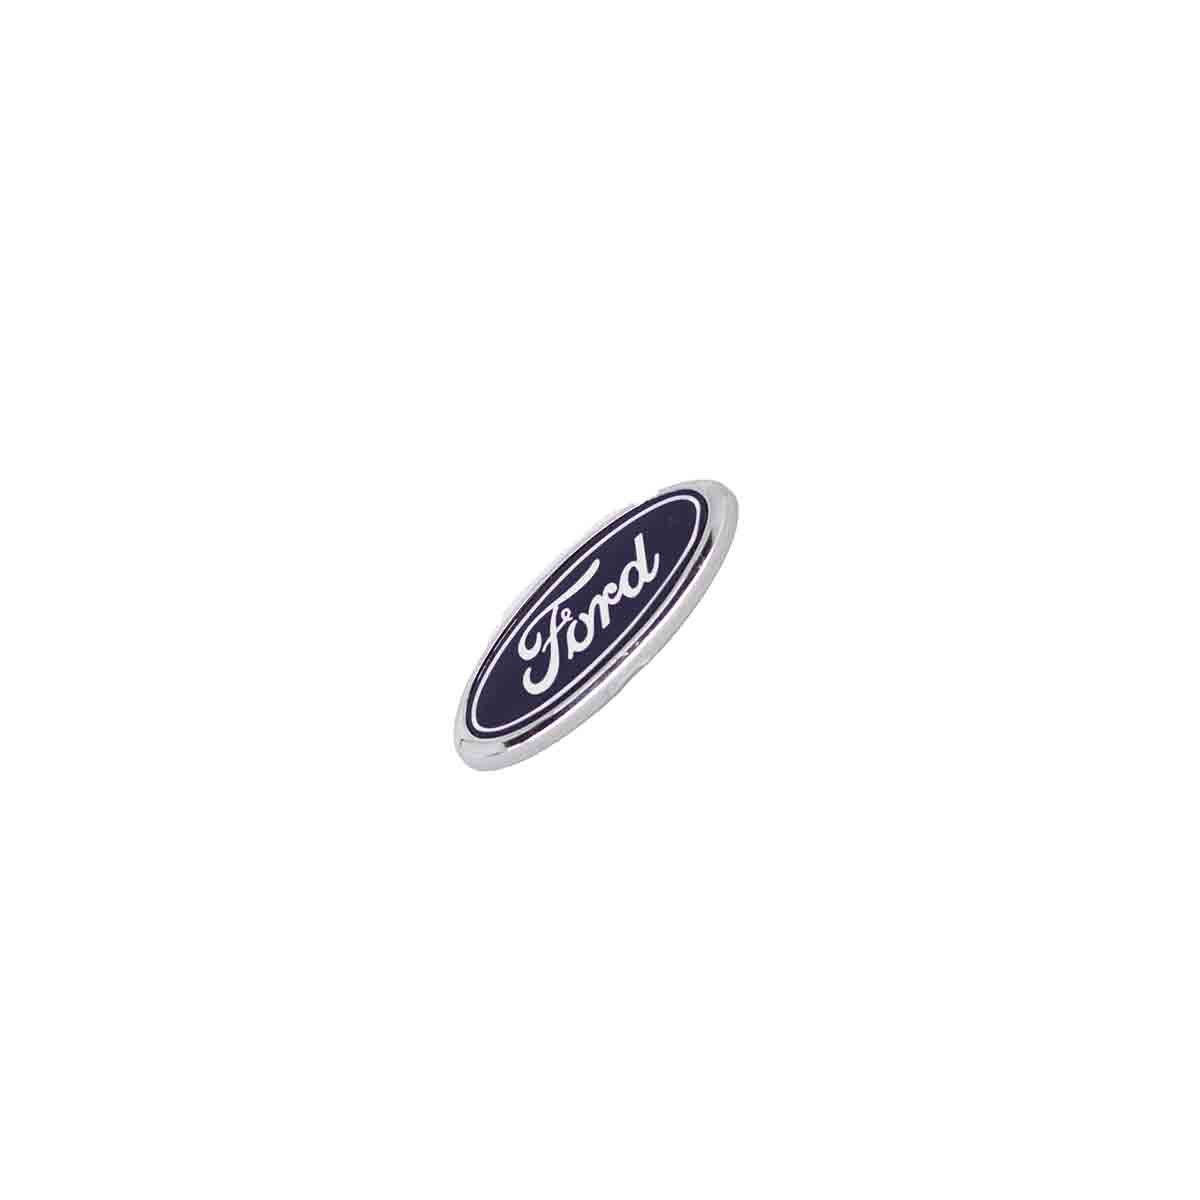 Emblema Grade Ford Pequeno Oval